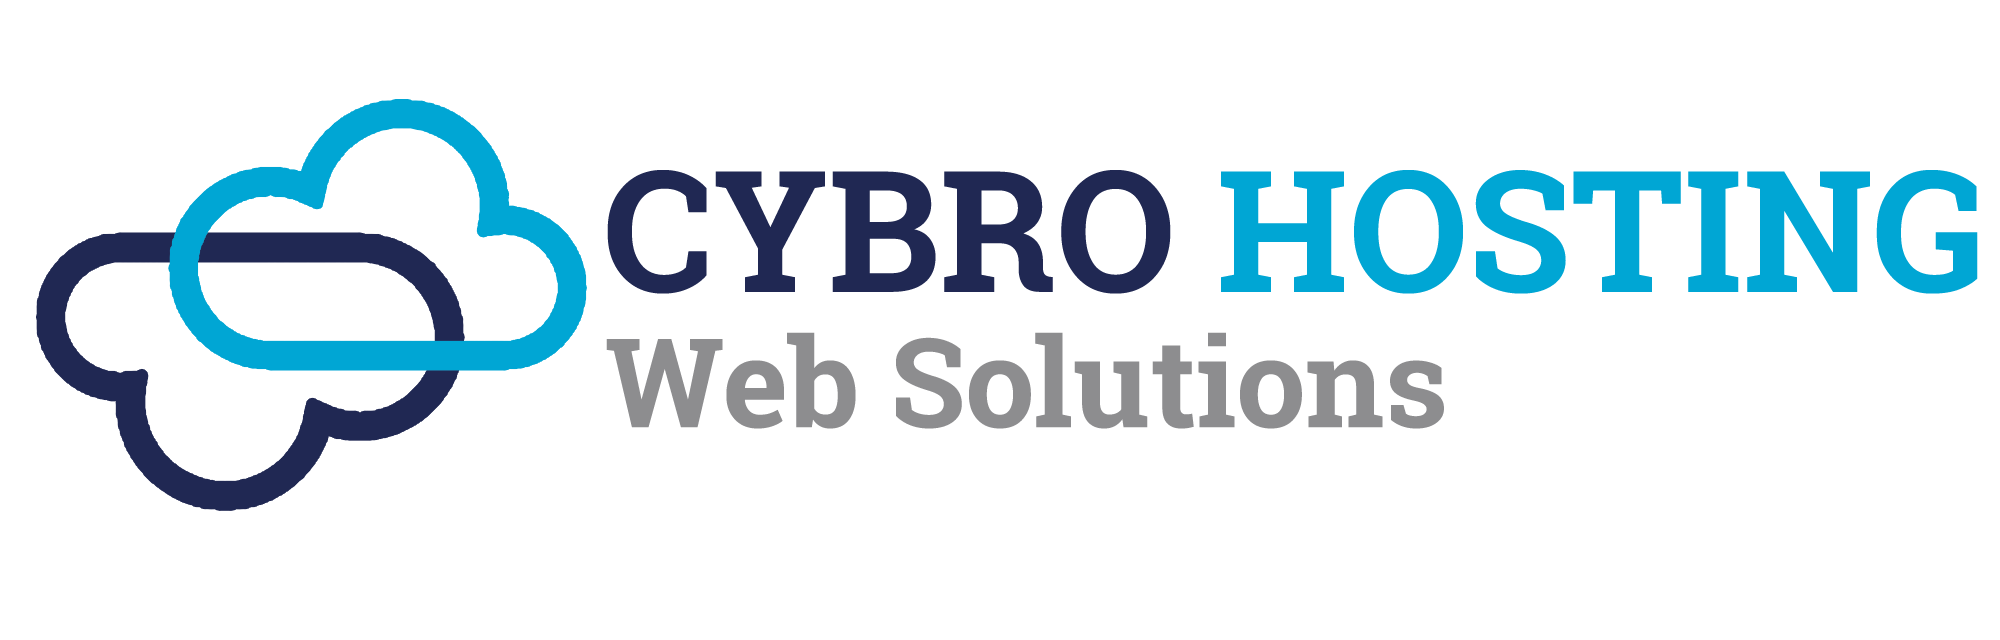 Cybrohosting Web Solutions